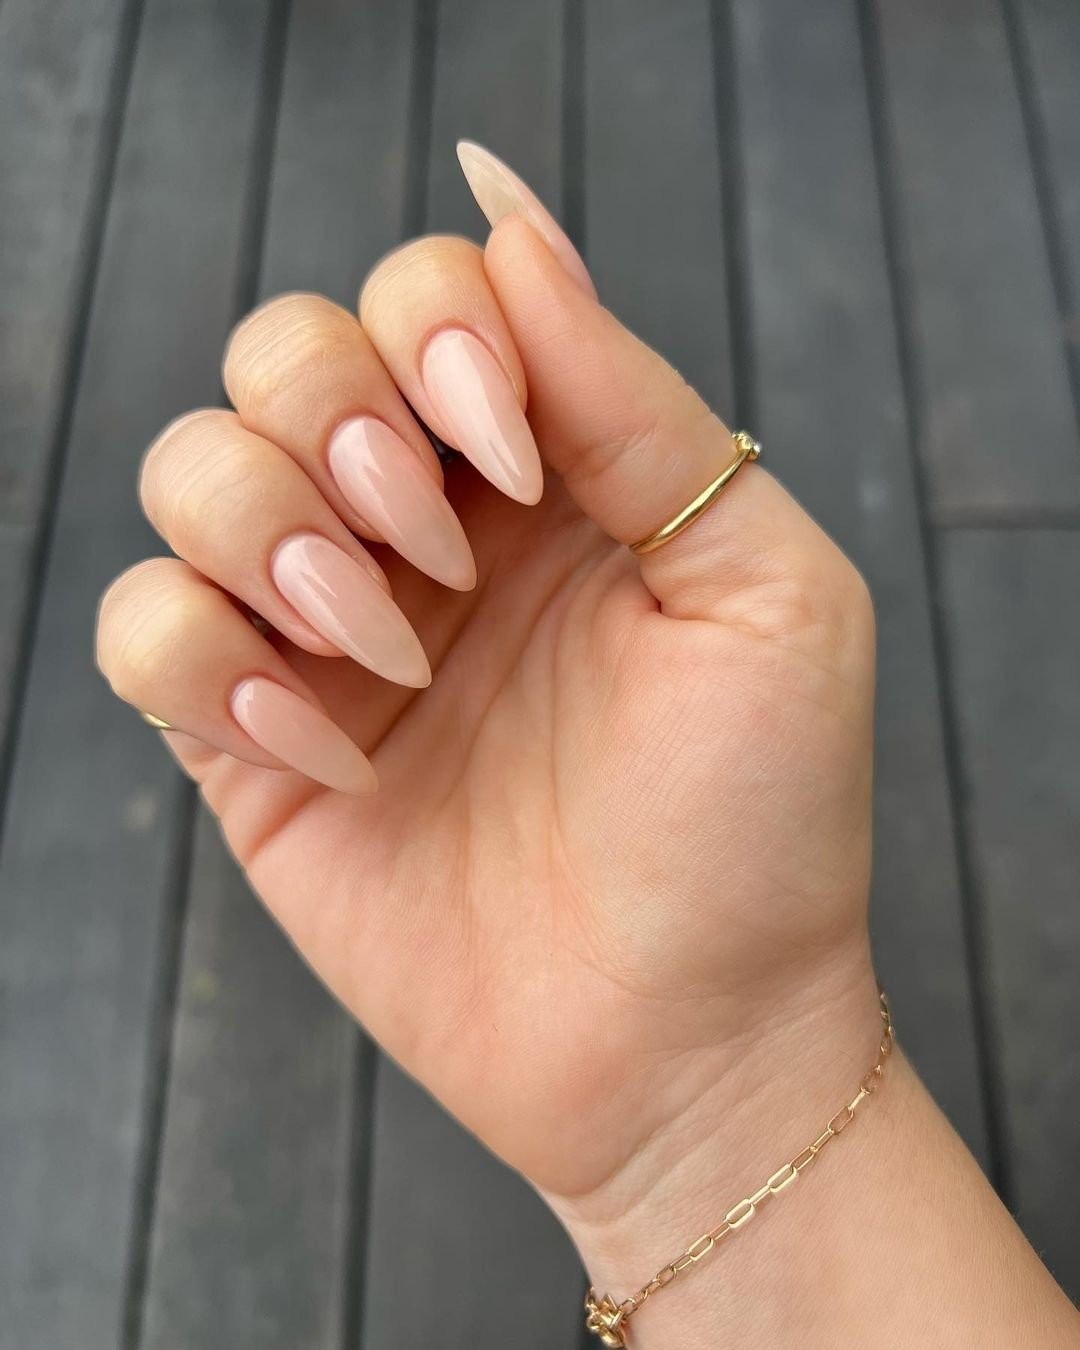 nails-classic.jpg